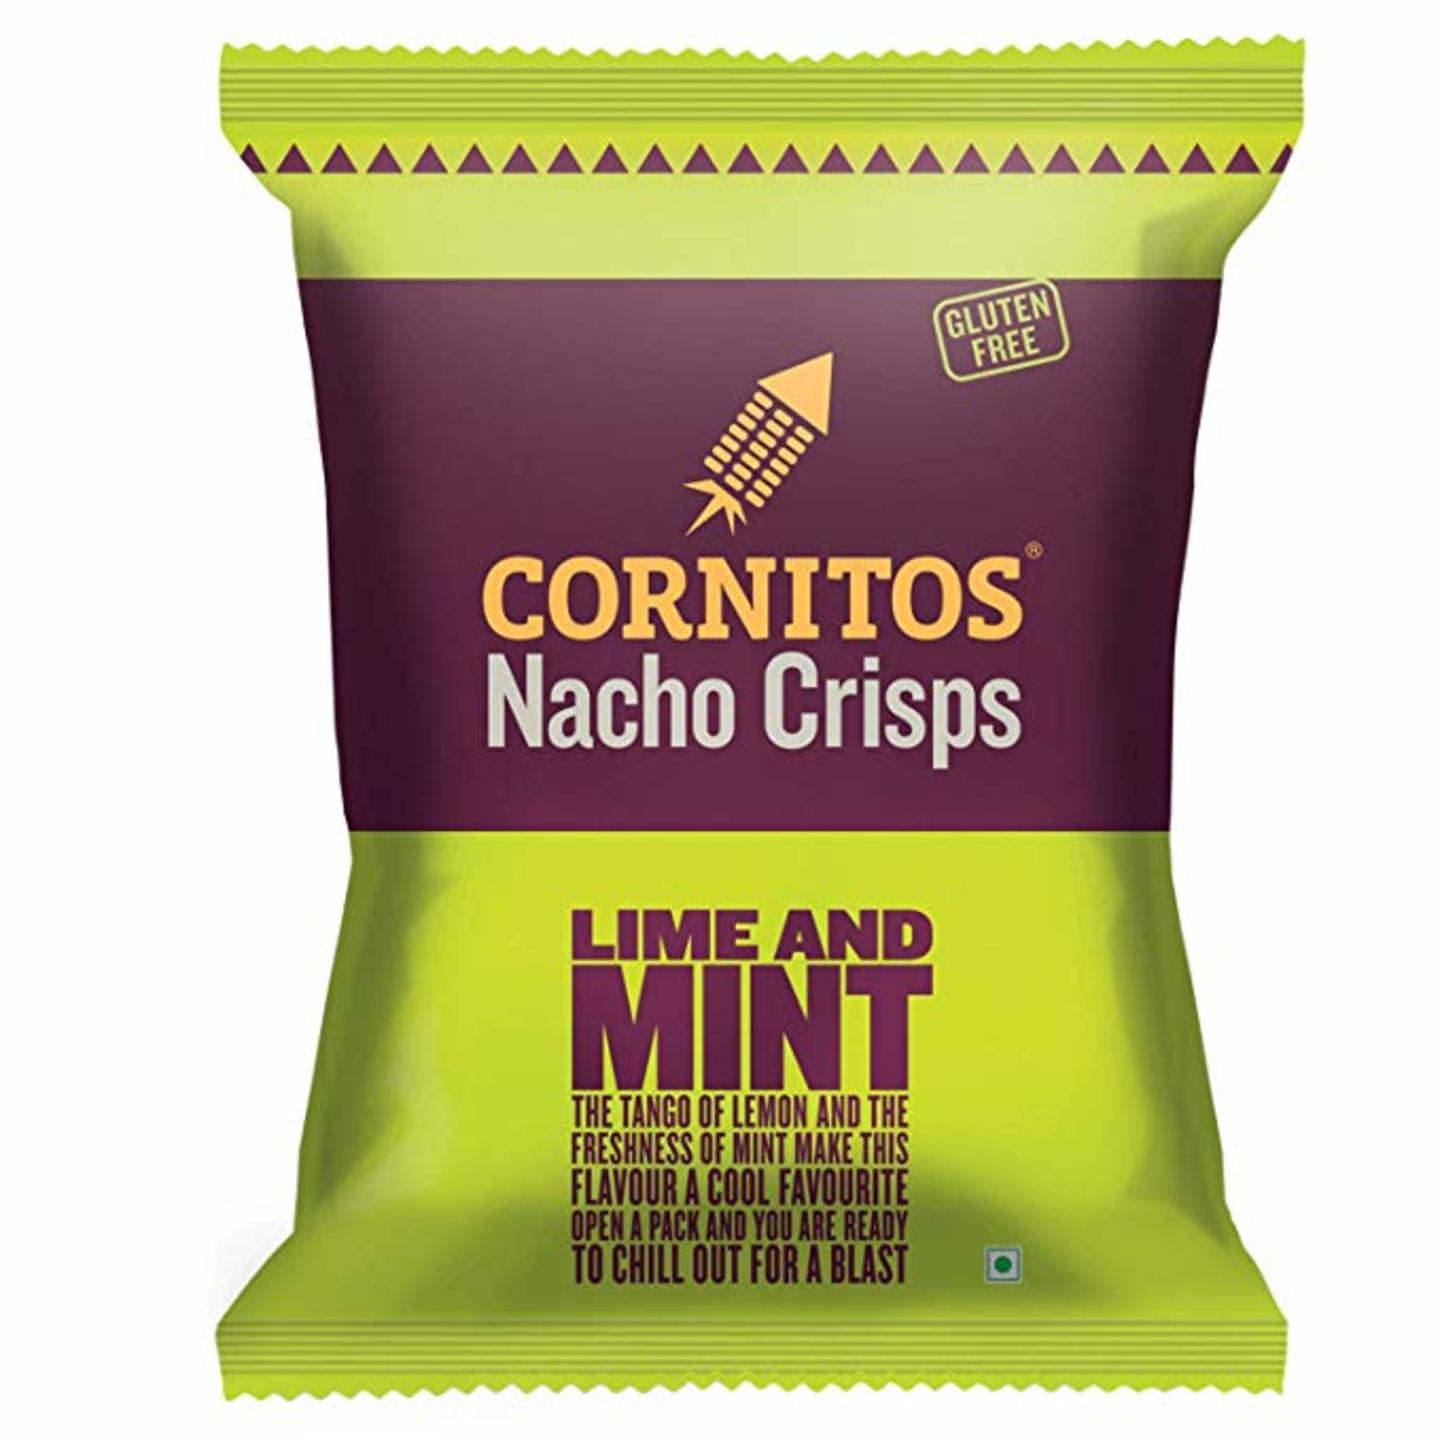 Cornitos Nachos Crisps, Lime and Mint, 60g